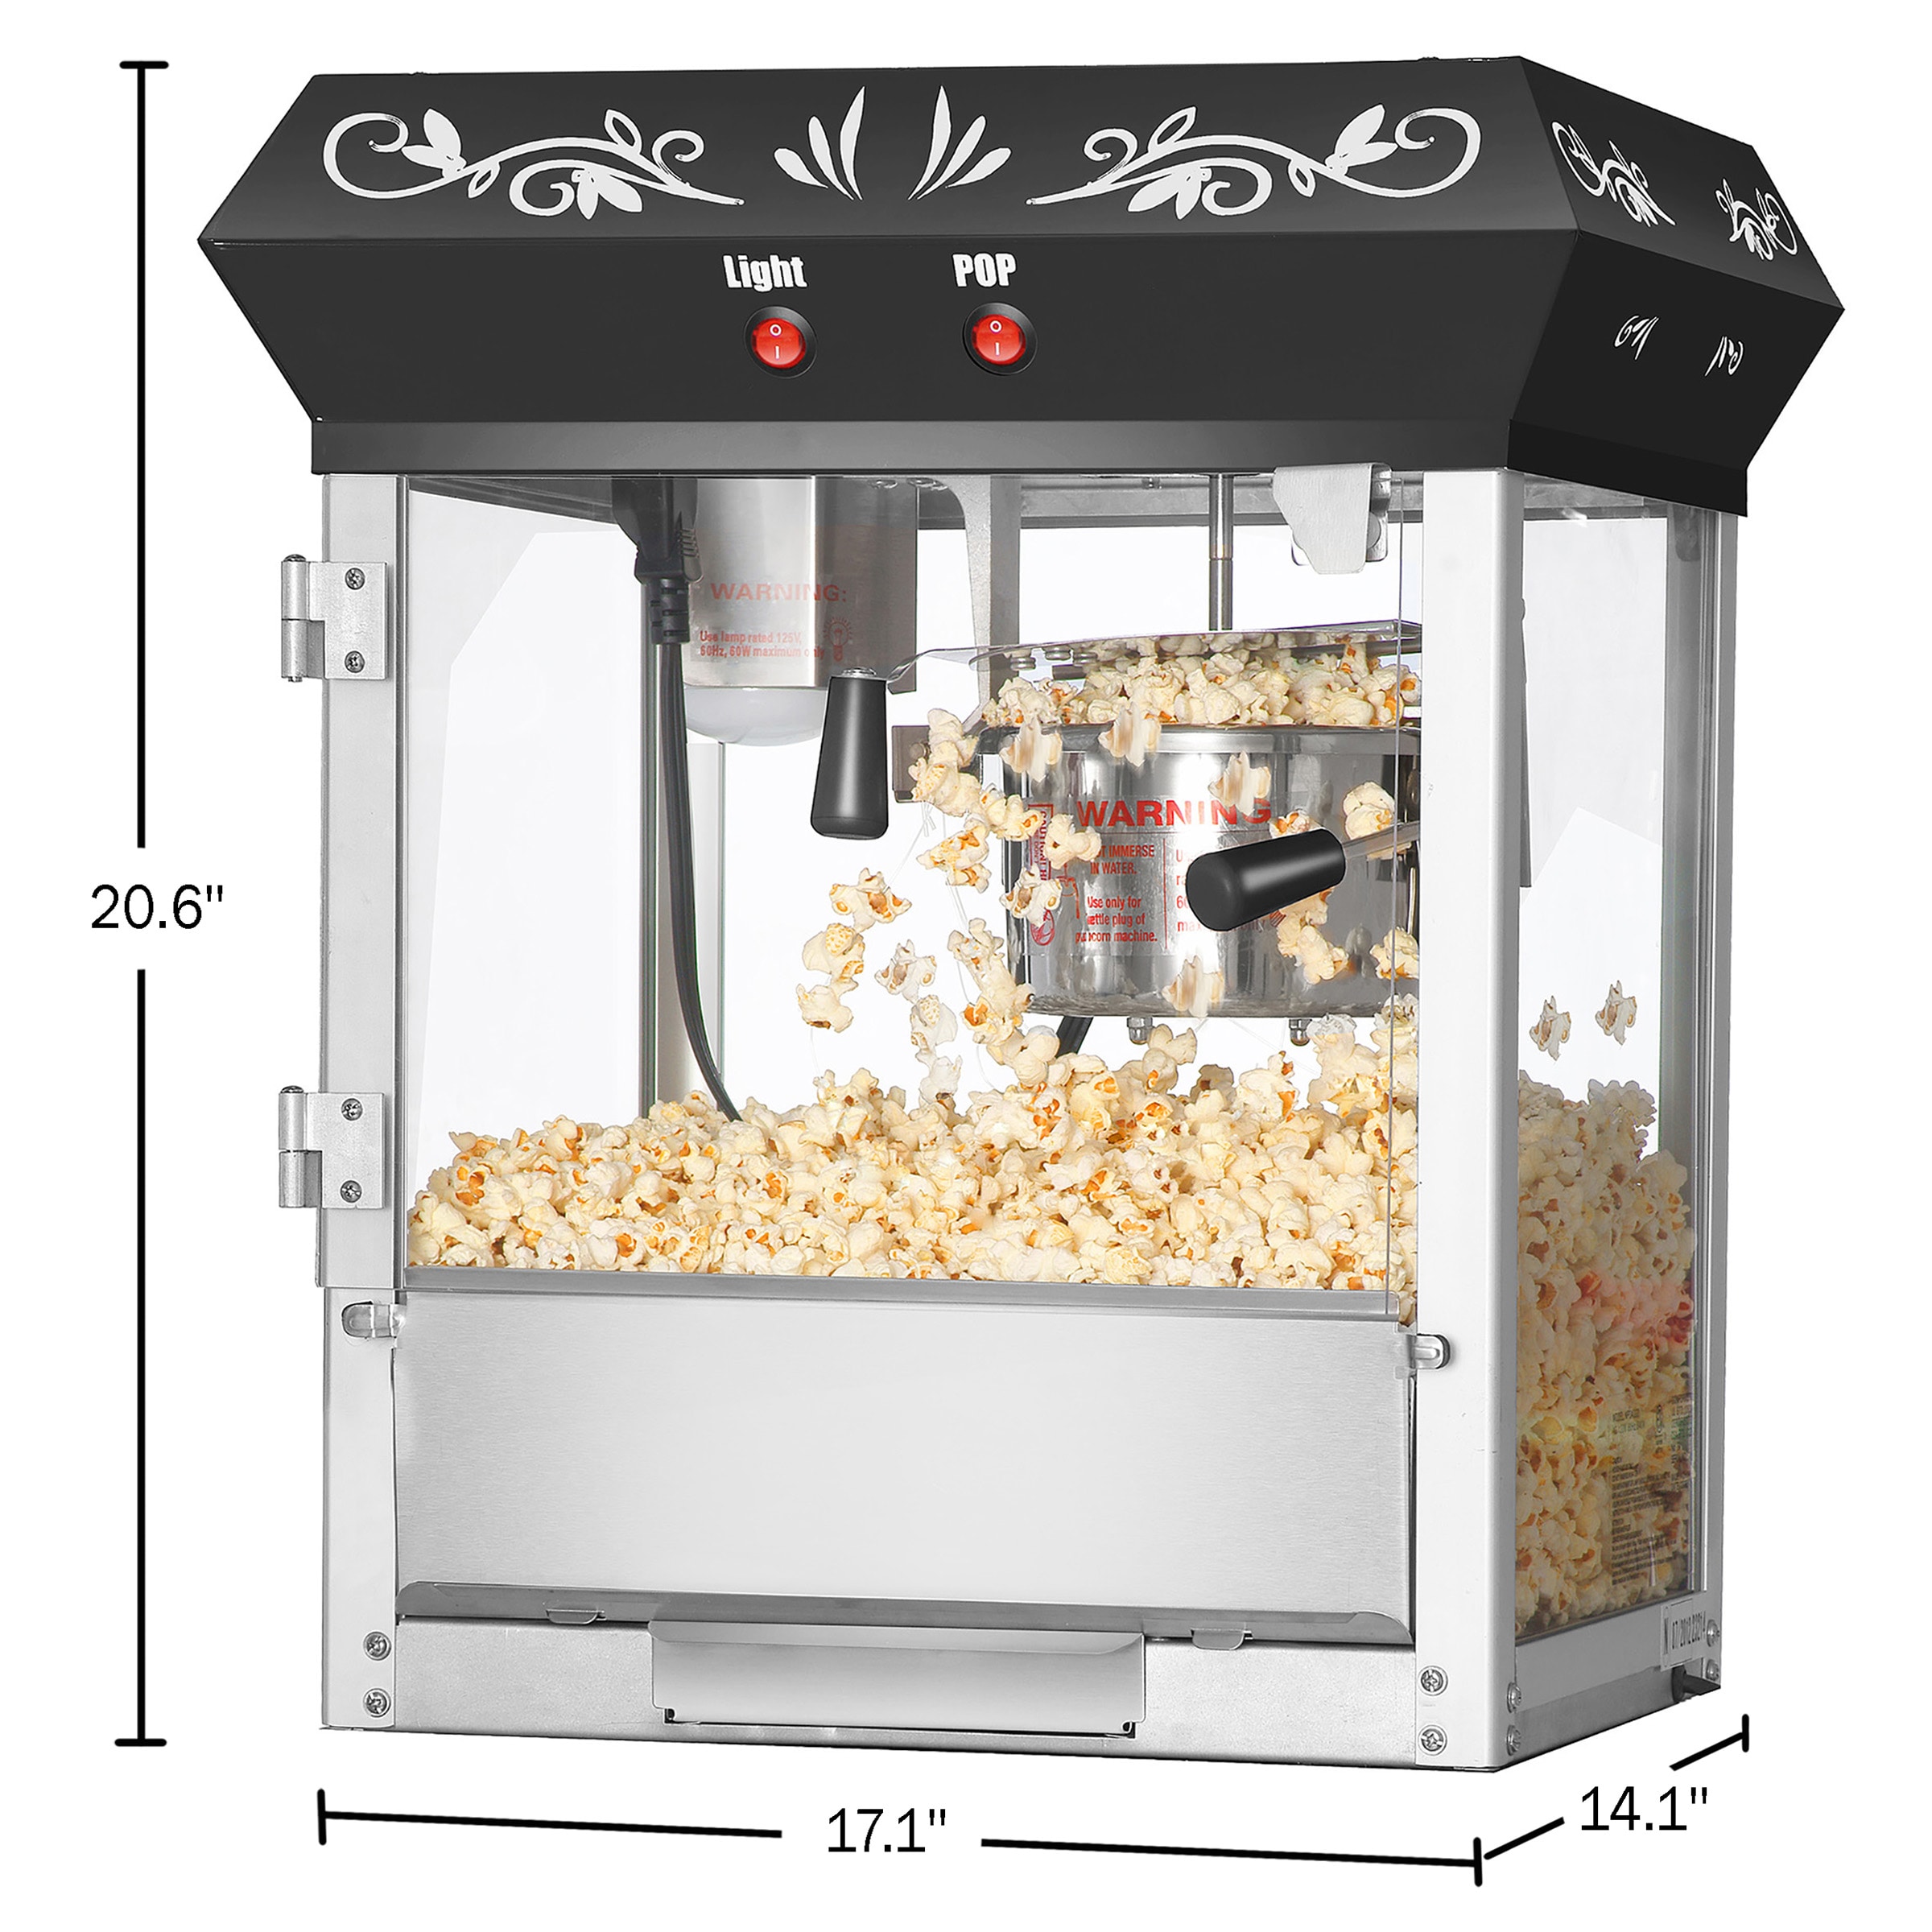 Paragon Theater Pop 4oz Popcorn Machine